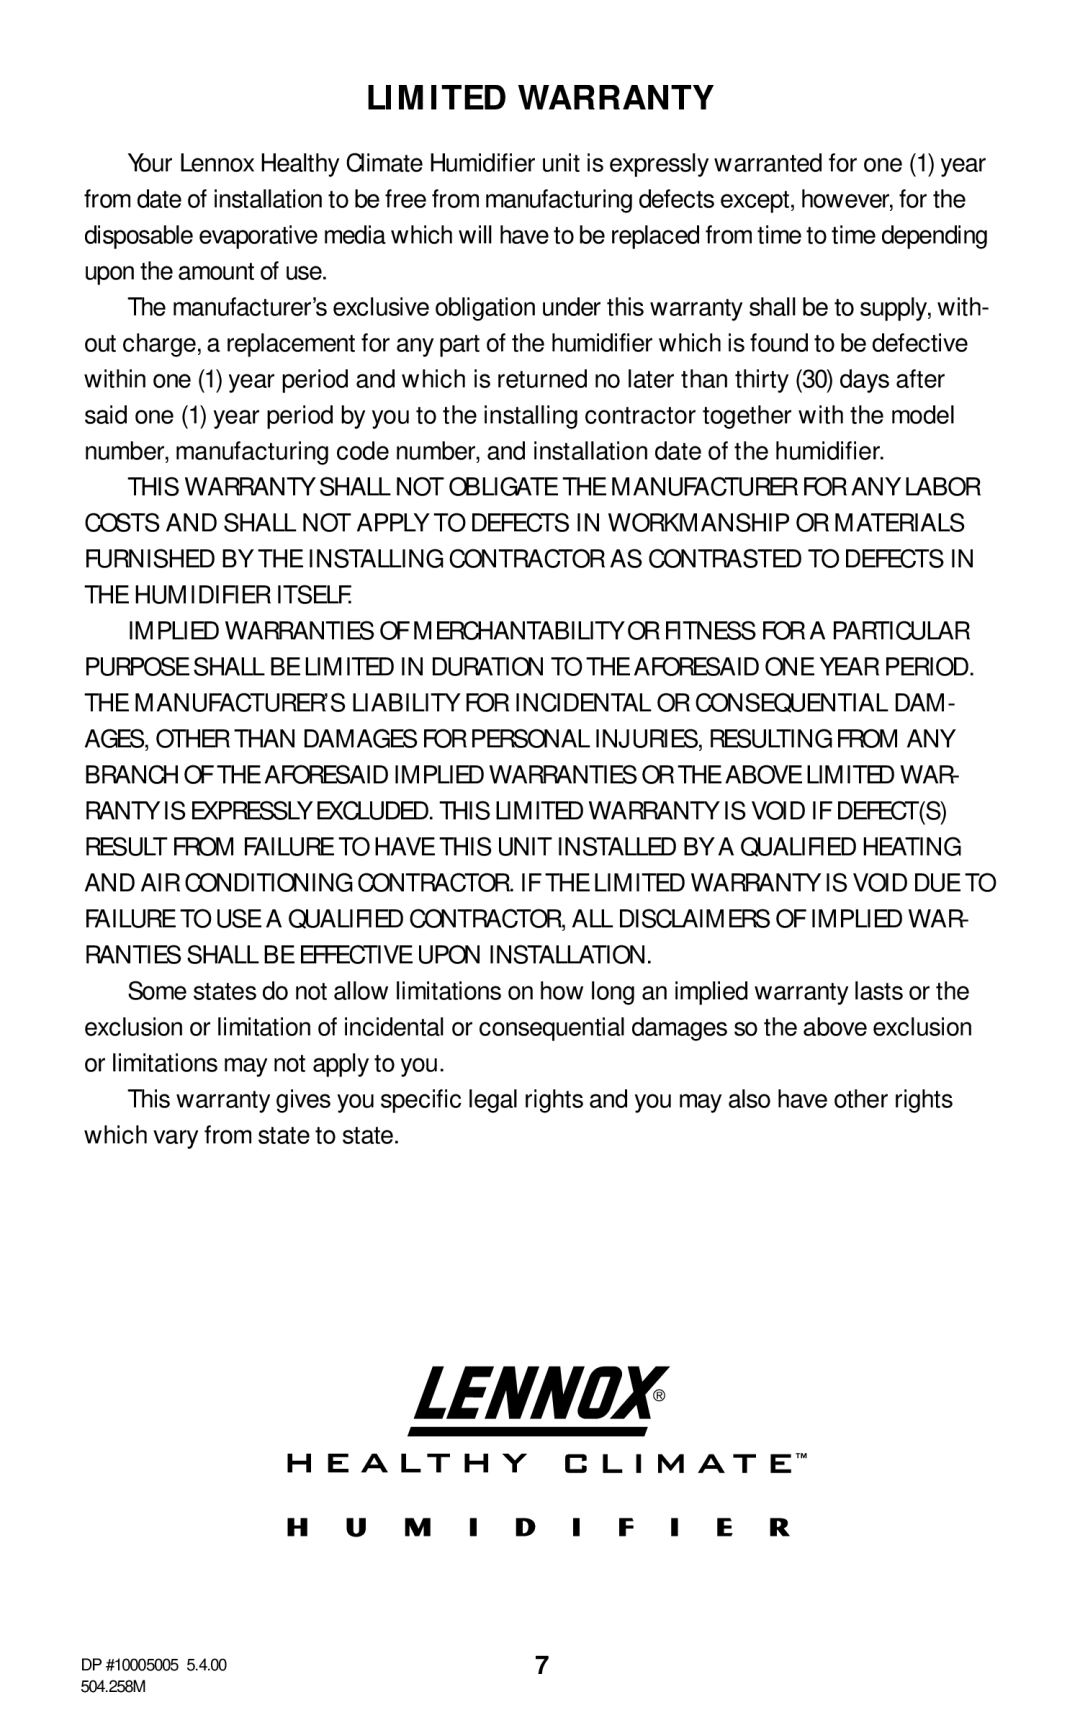 Lennox International Inc WB2-17 WP2-18, WB2-12 owner manual Limited Warranty, DP #10005005, 504.258M 